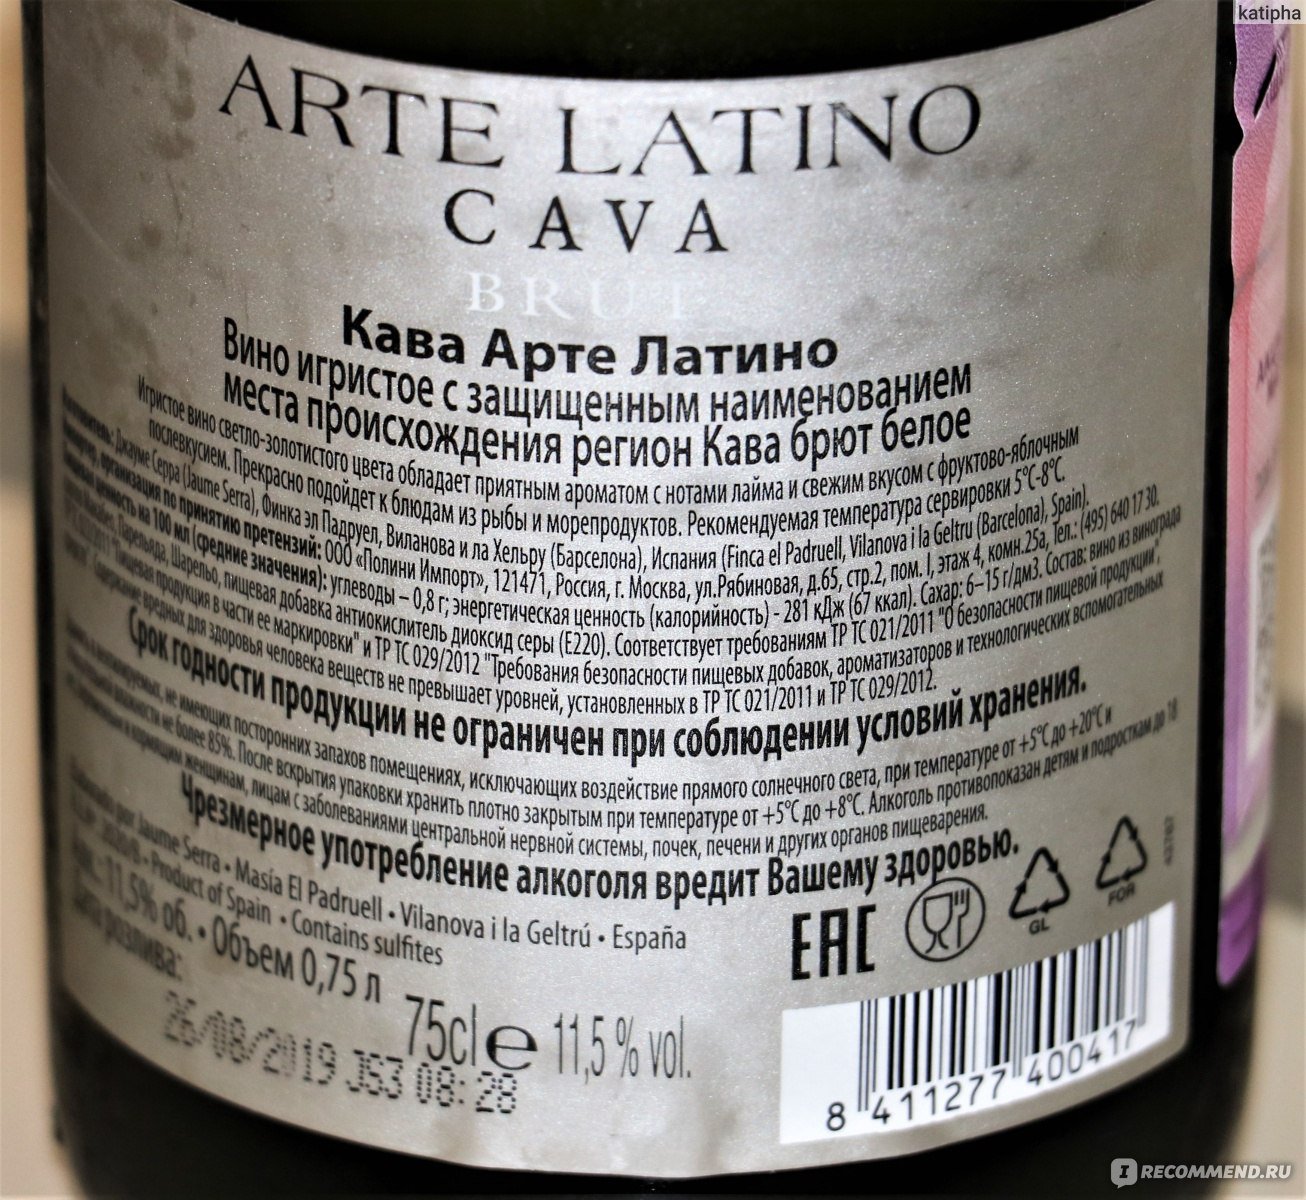 Arte latino brut. Cava Latino Brut. Вино игристое Arte Latino. Вино игристое кава арте латино. Игристое вино Arte Latino Cava Brut.